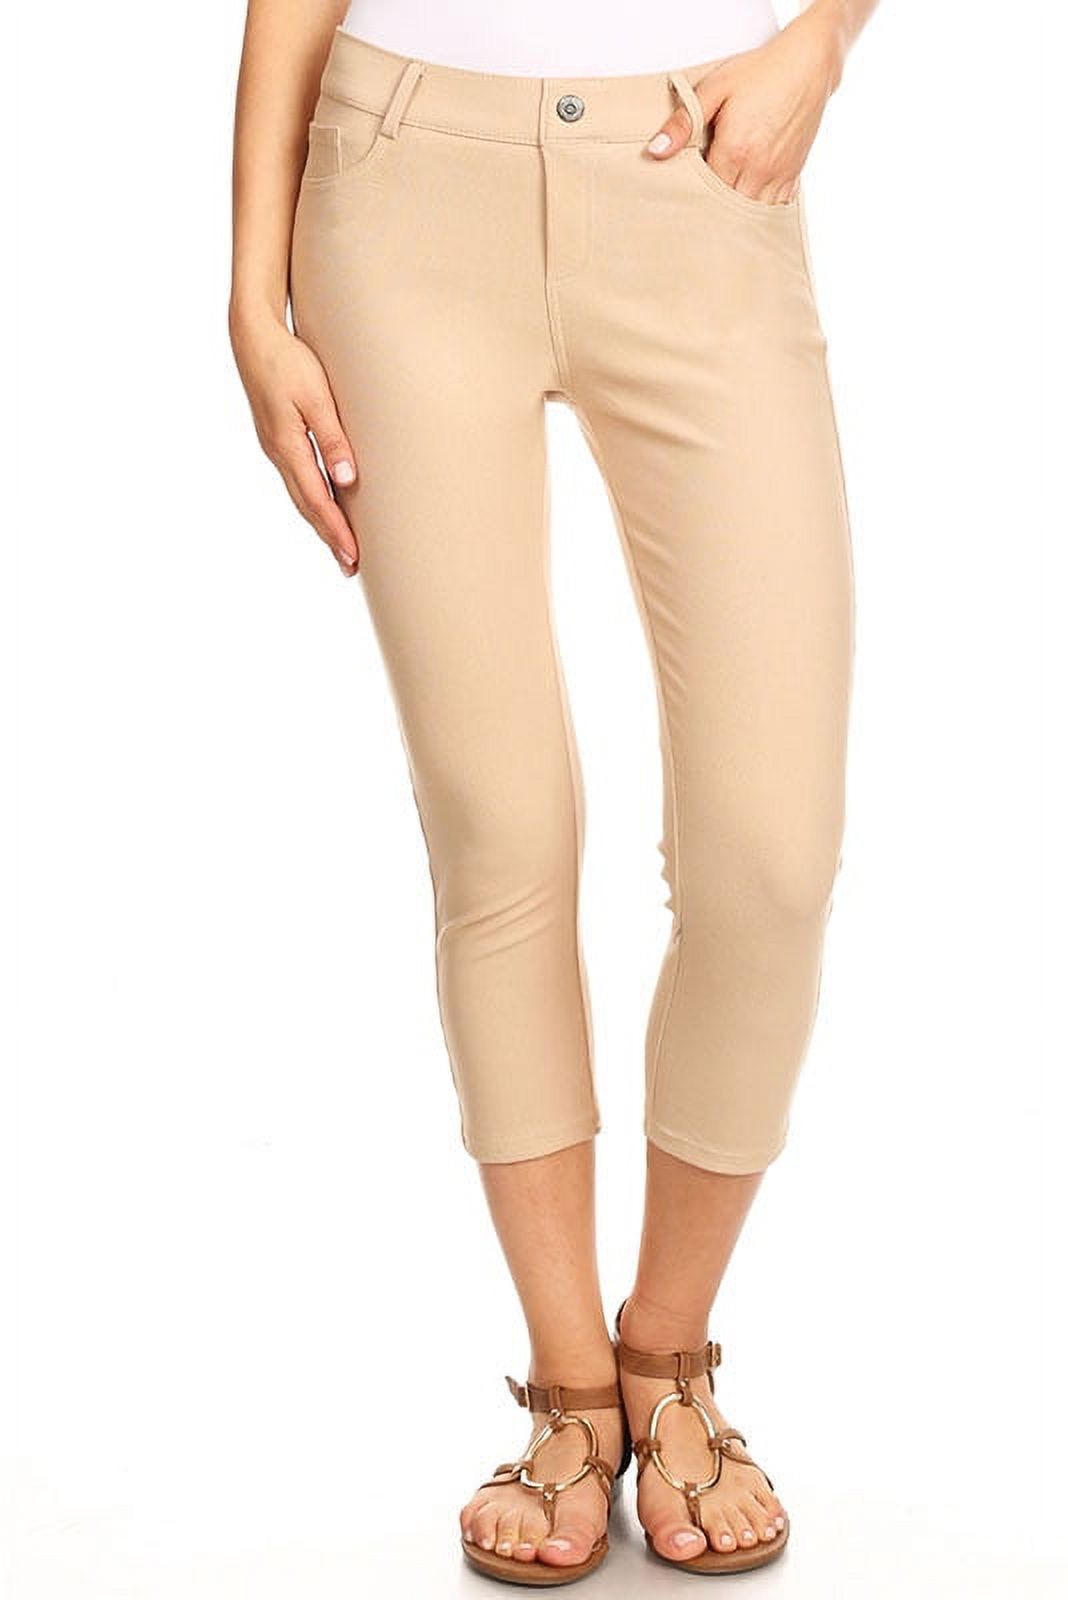 Women's Cotton Blend Capri Jeggings Stretchy Skinny Pants Jeans Leggings - image 1 of 3